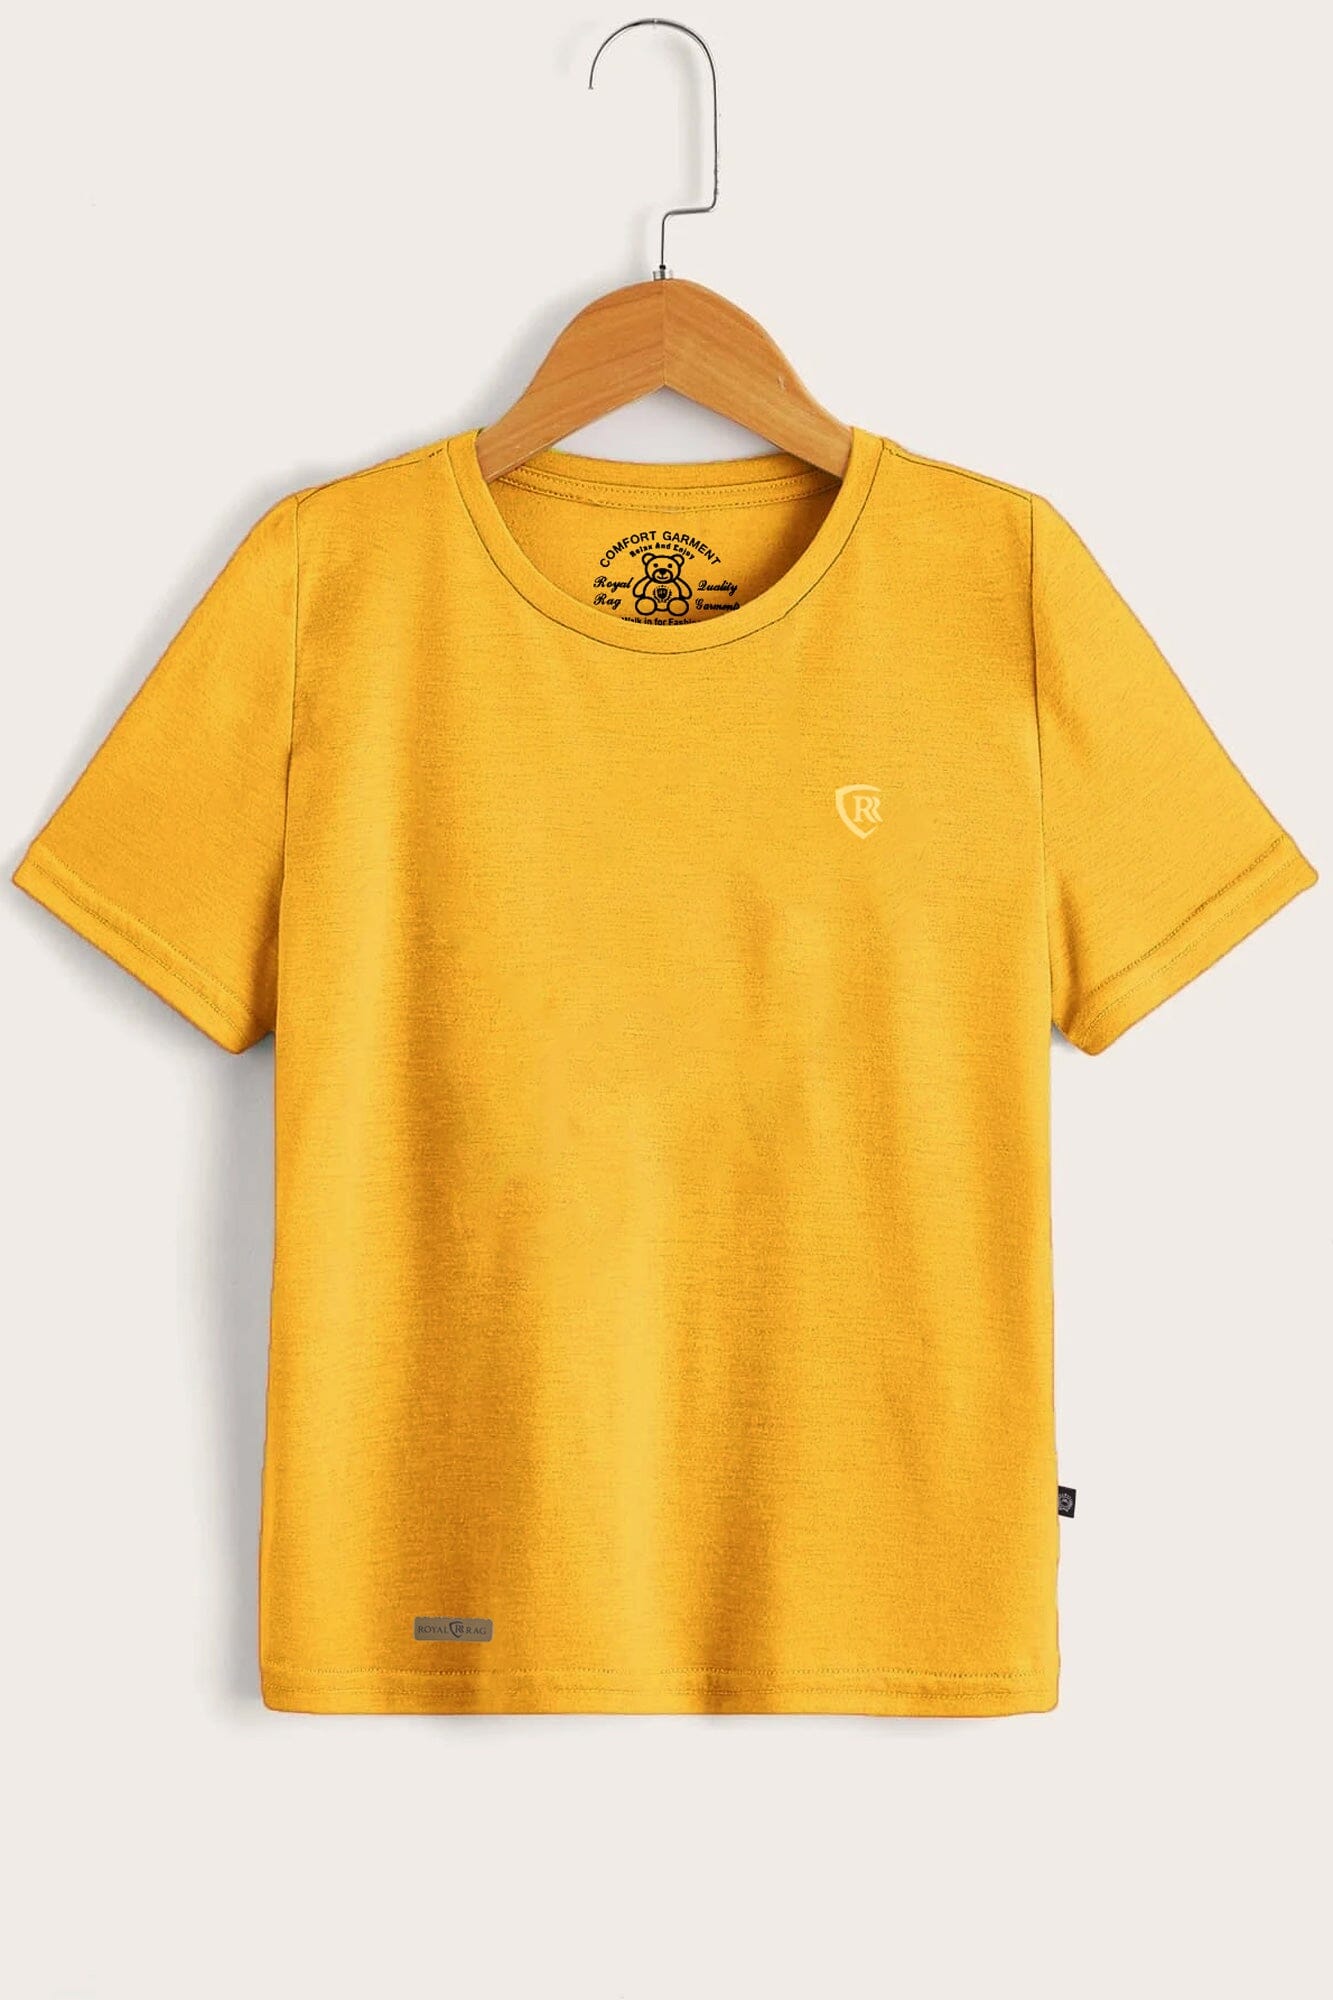 RR Kid's Logo Printed Short Sleeve Tee Shirt Boy's Tee Shirt Usman Traders Yellow 2-3 Years 